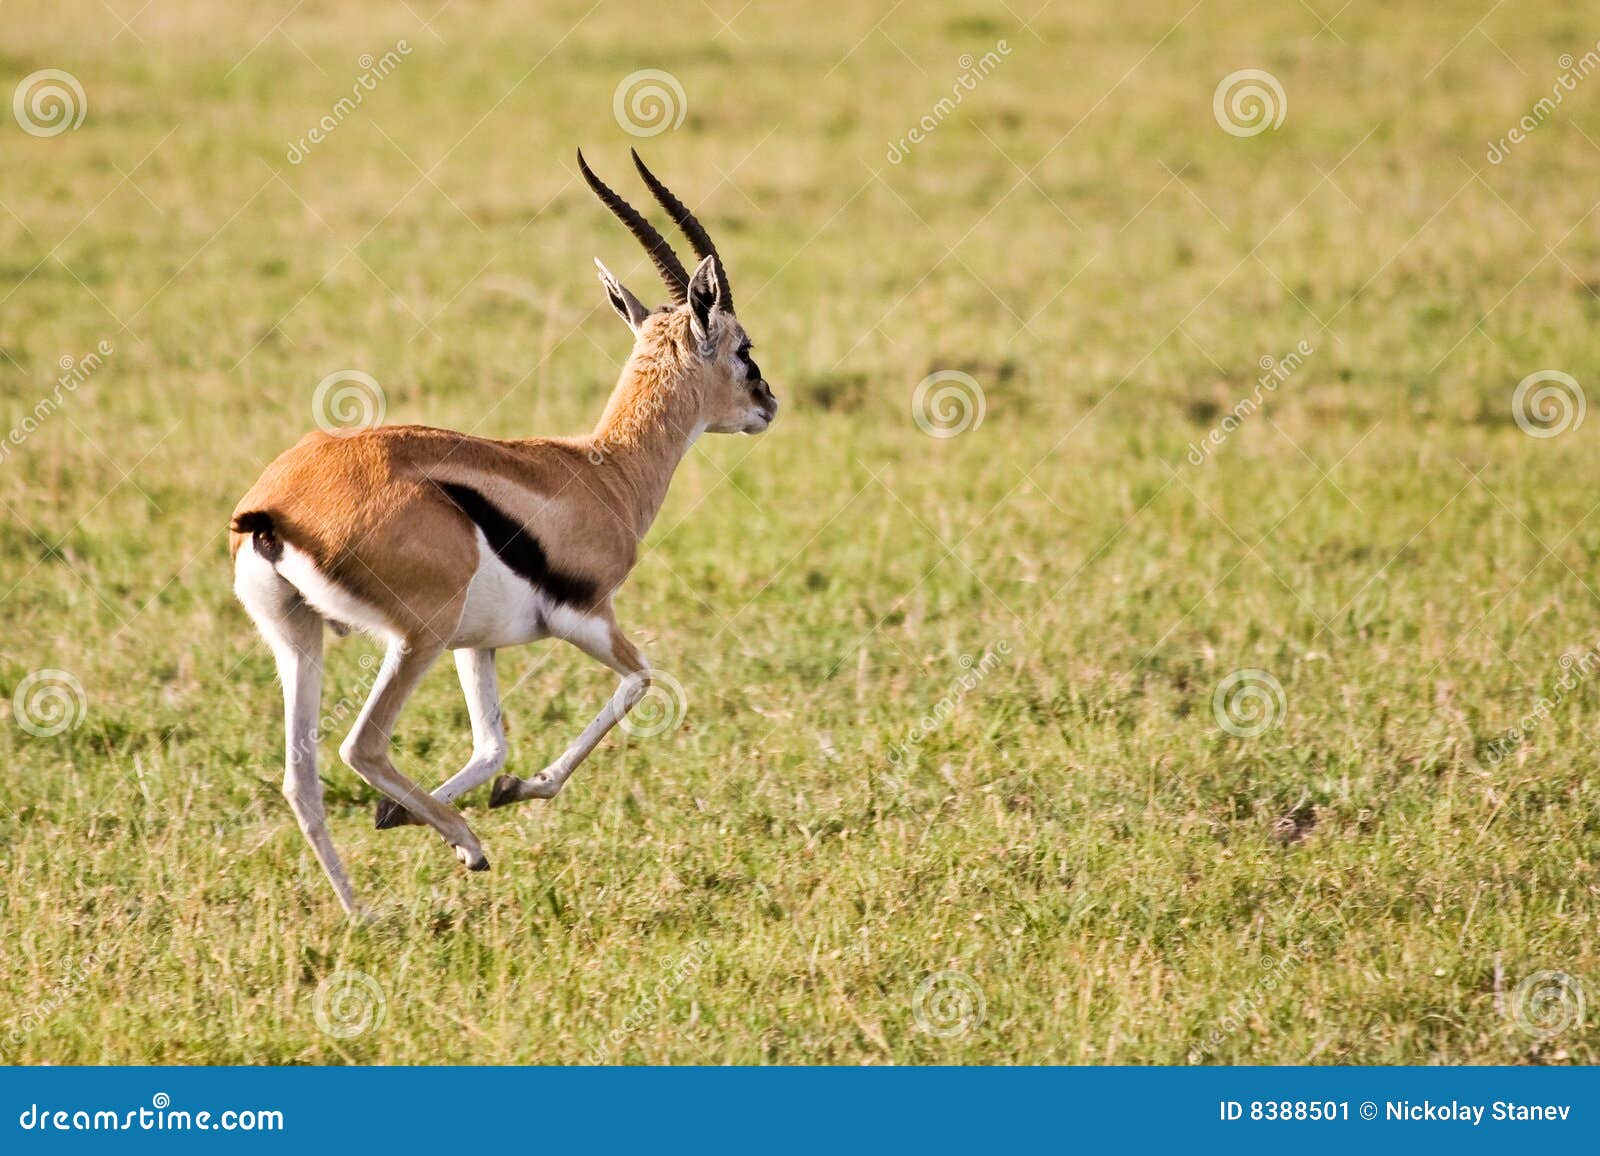 thomson gazelle running in serengeti